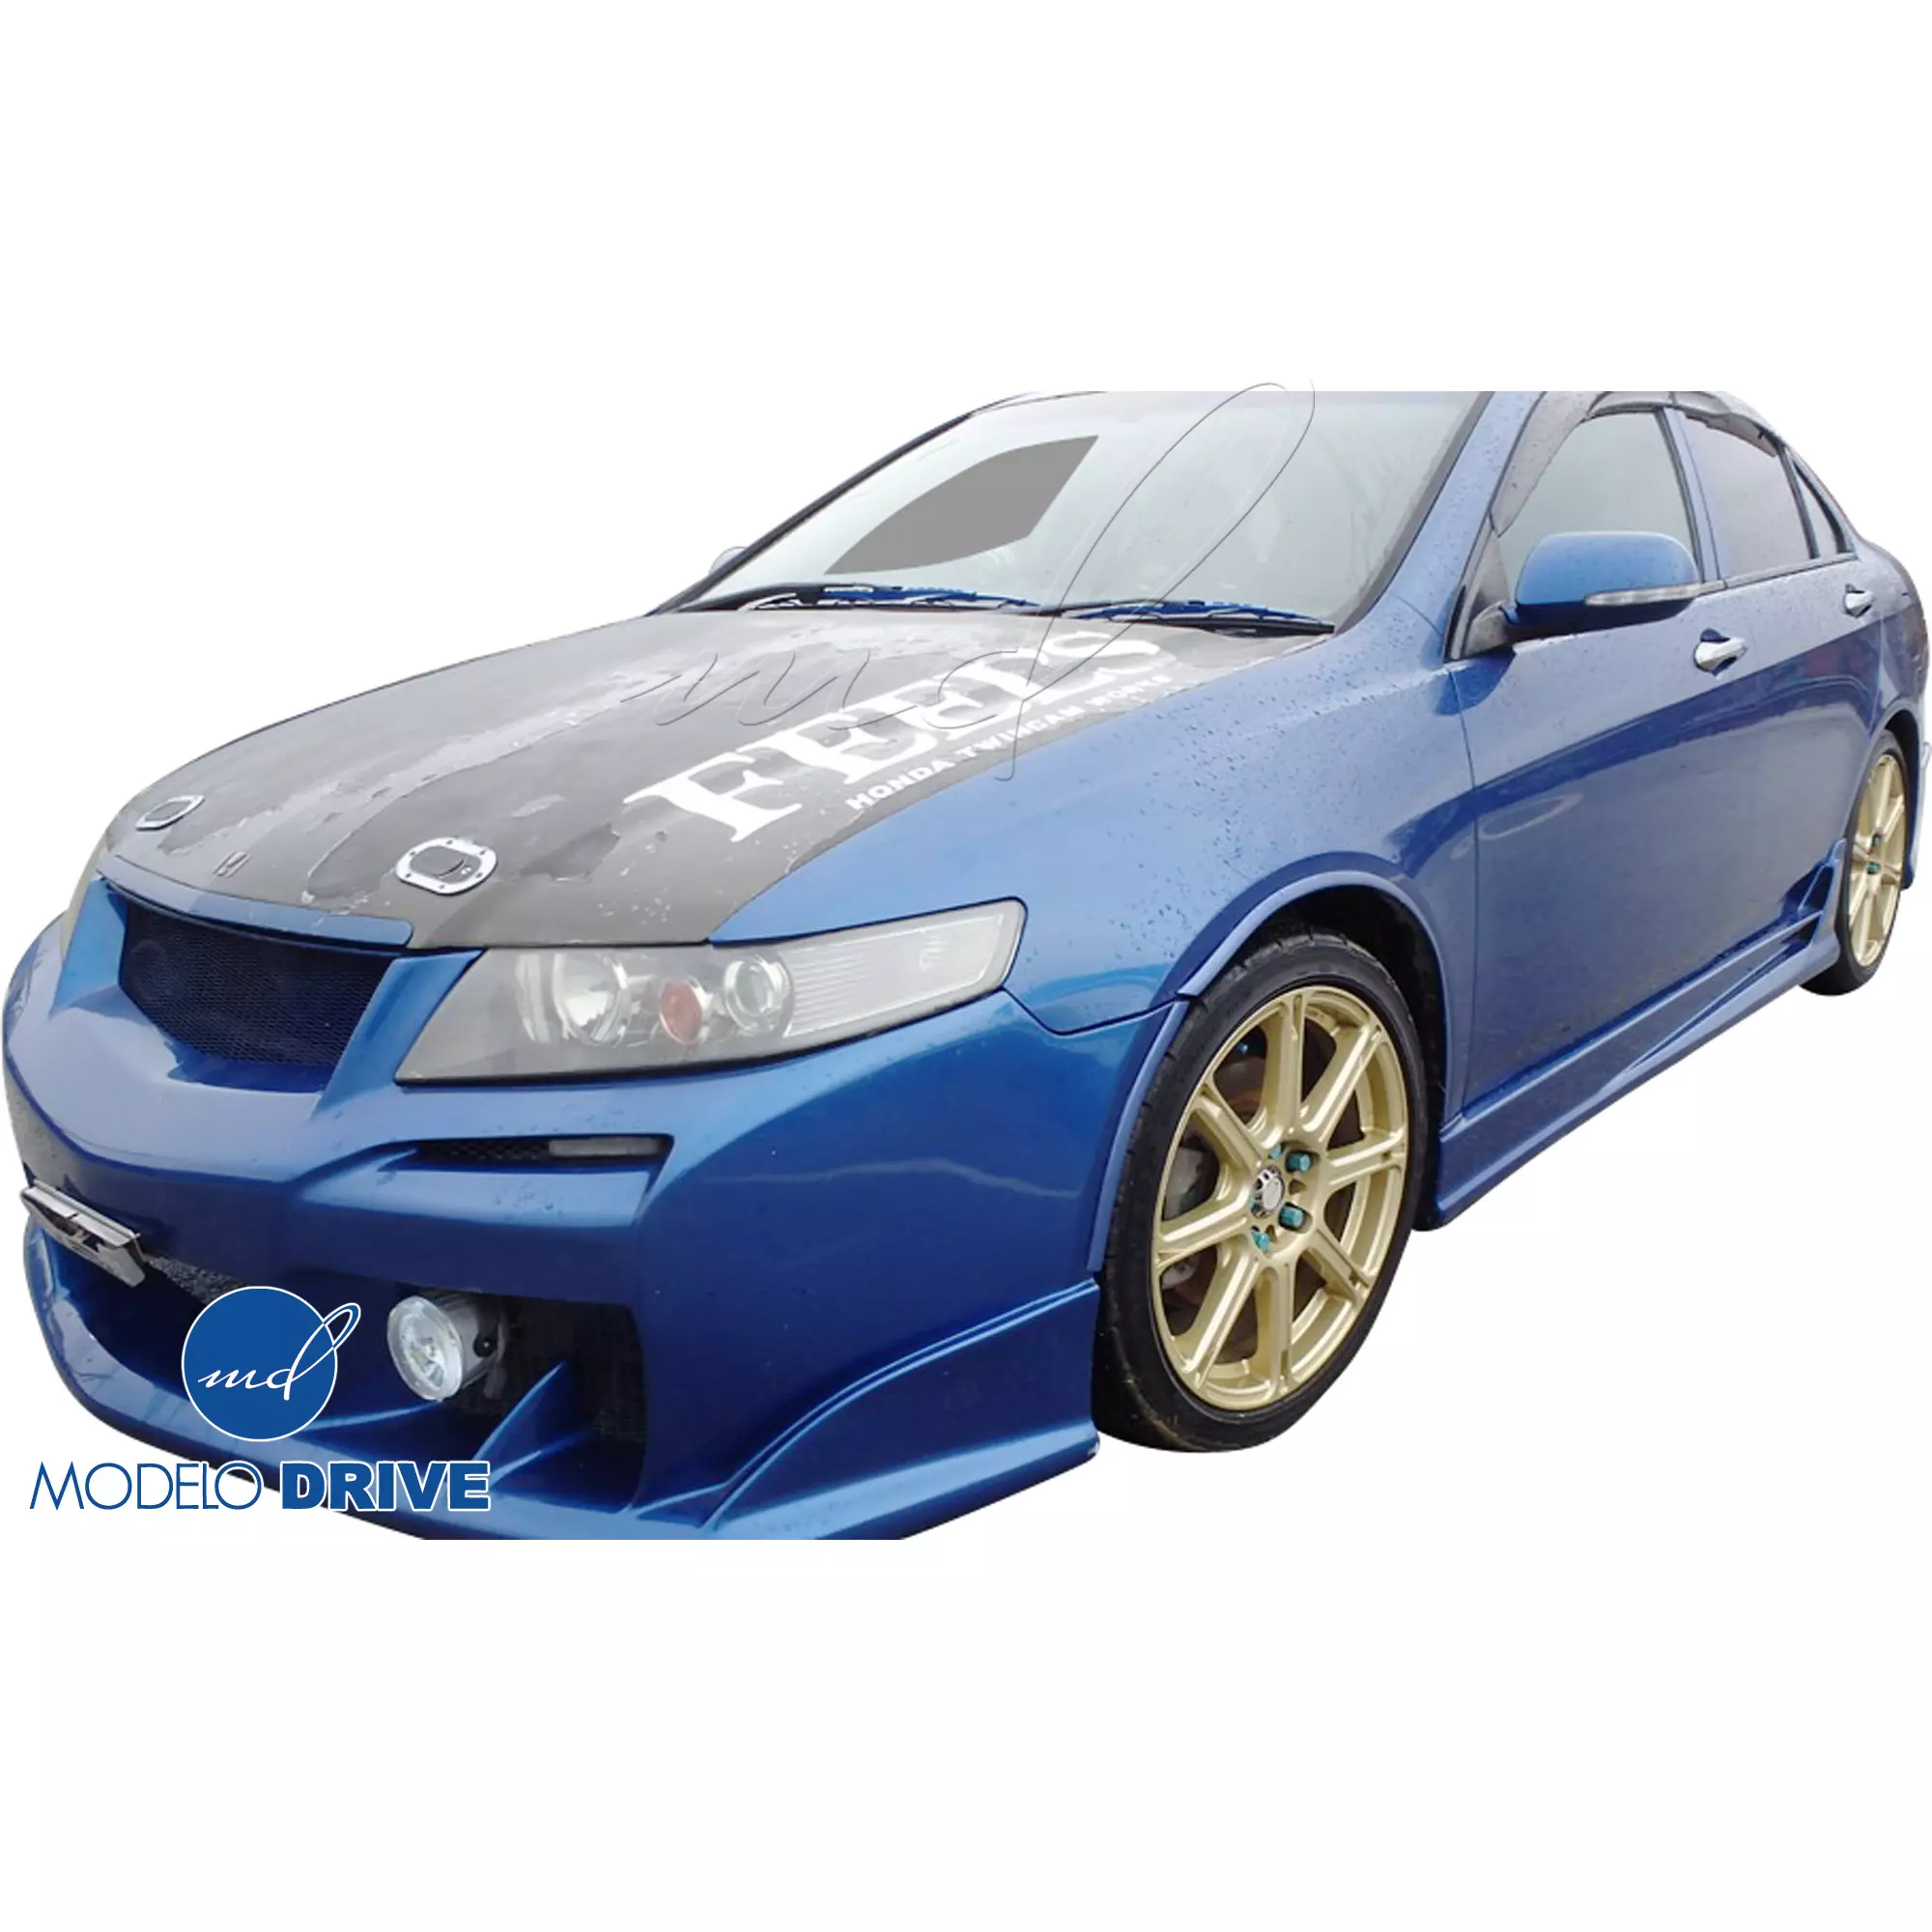 ModeloDrive FRP LSTA Body Kit 4pc > Acura TSX CL9 2004-2008 - Image 22